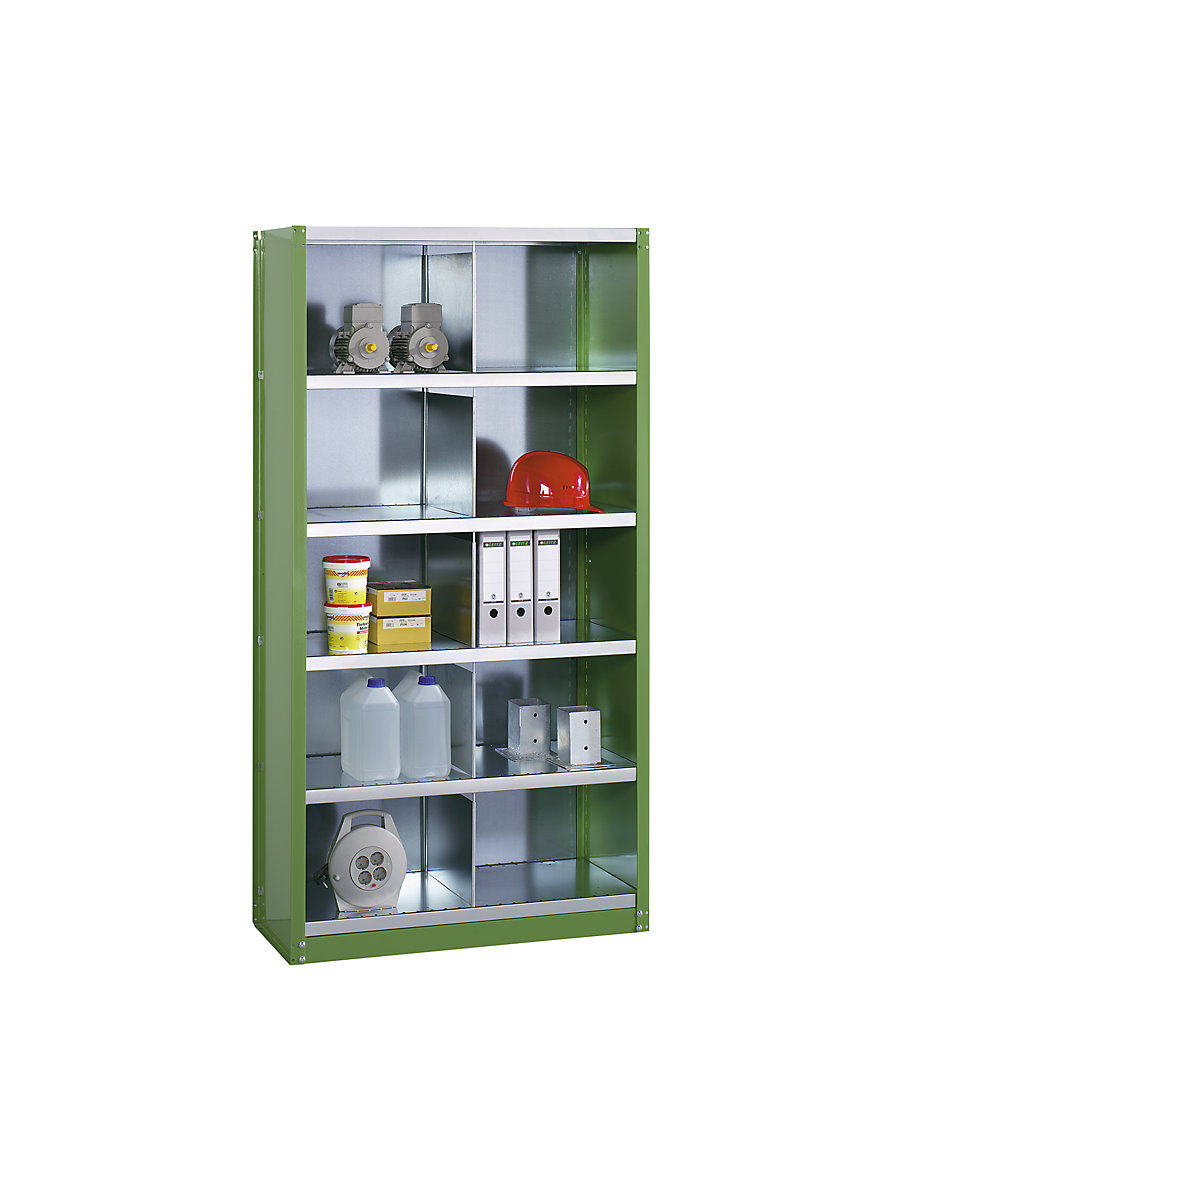 Boltless shelf unit system, shelf unit height 1990 mm – eurokraft pro, 10 compartments, WxD 1000 x 300 mm, extension shelf unit, gentian blue RAL 5010-1